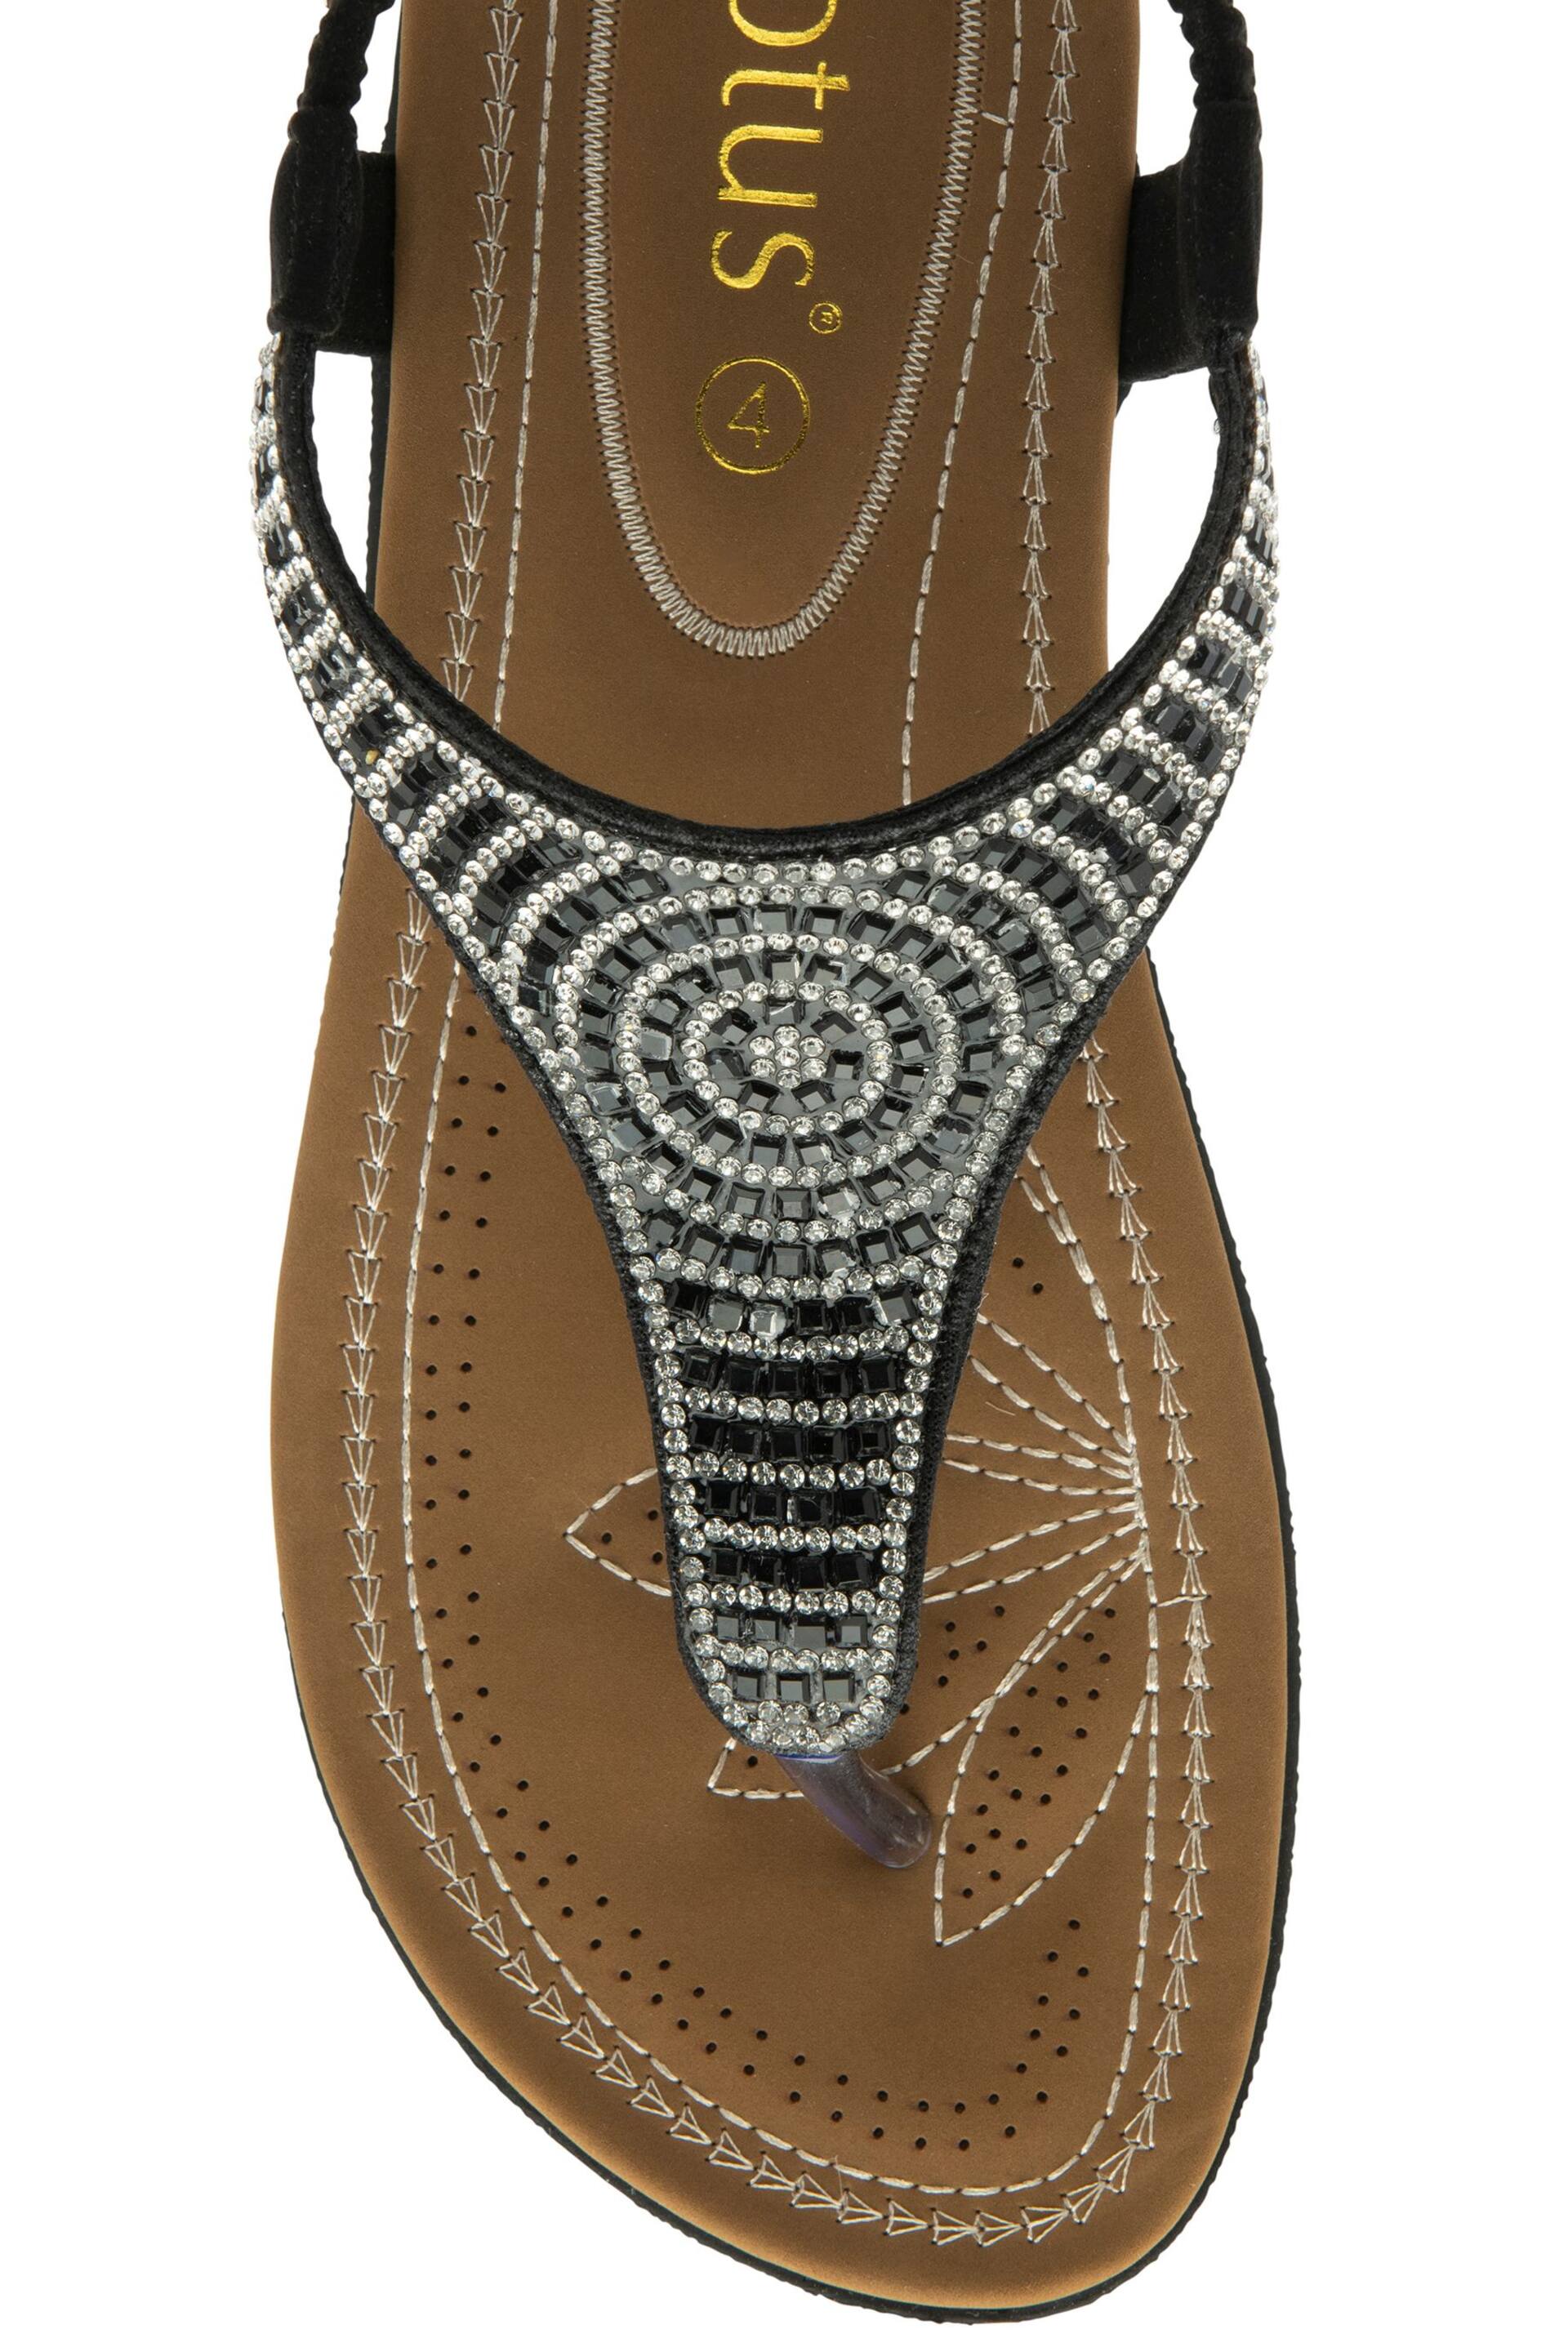 Lotus Black Casual Toe Thong Holiday Sandals - Image 4 of 4